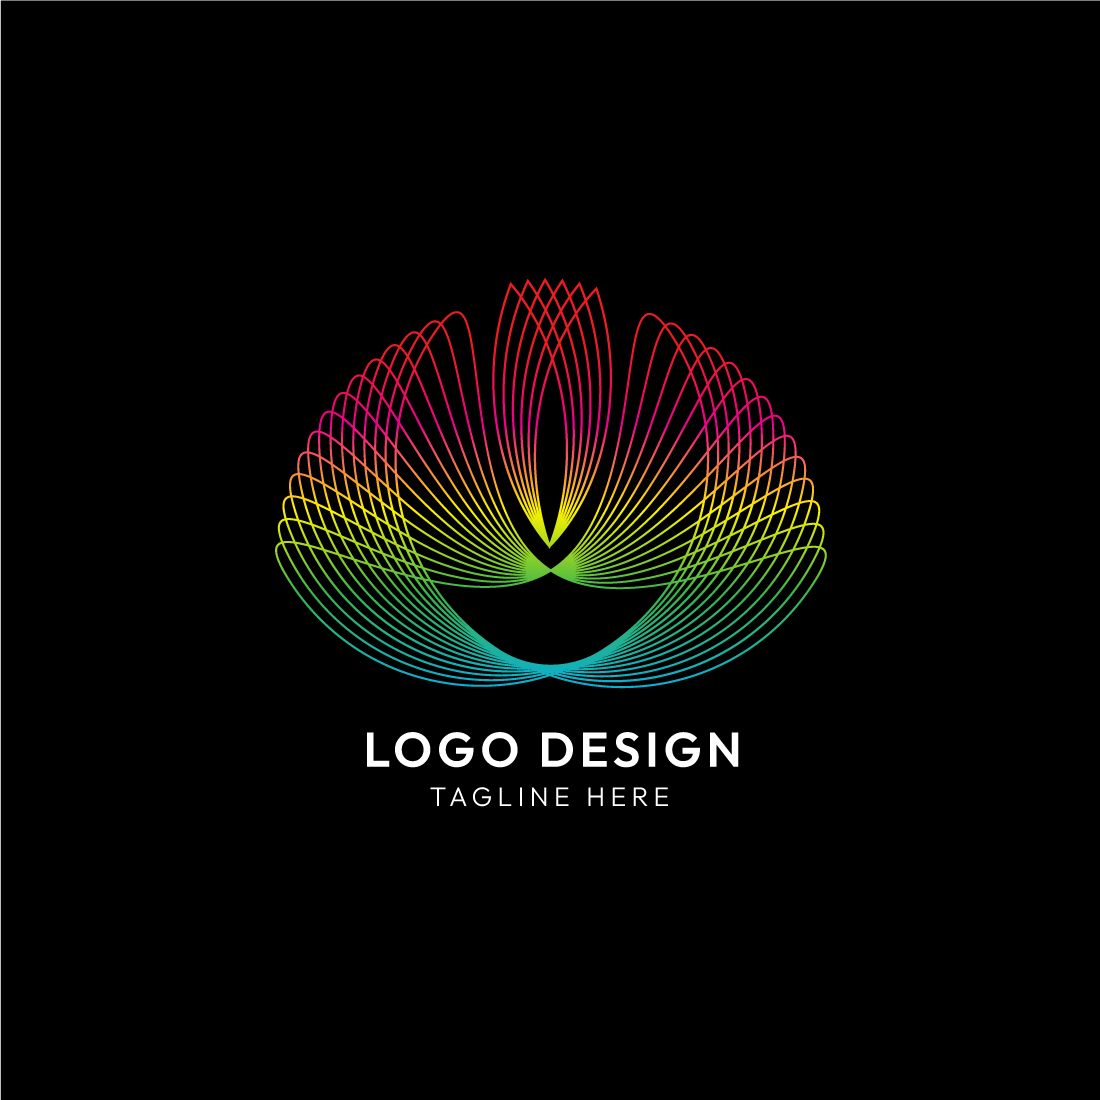 Line Art Nature & Beauty Logo Design Bundle cover image.